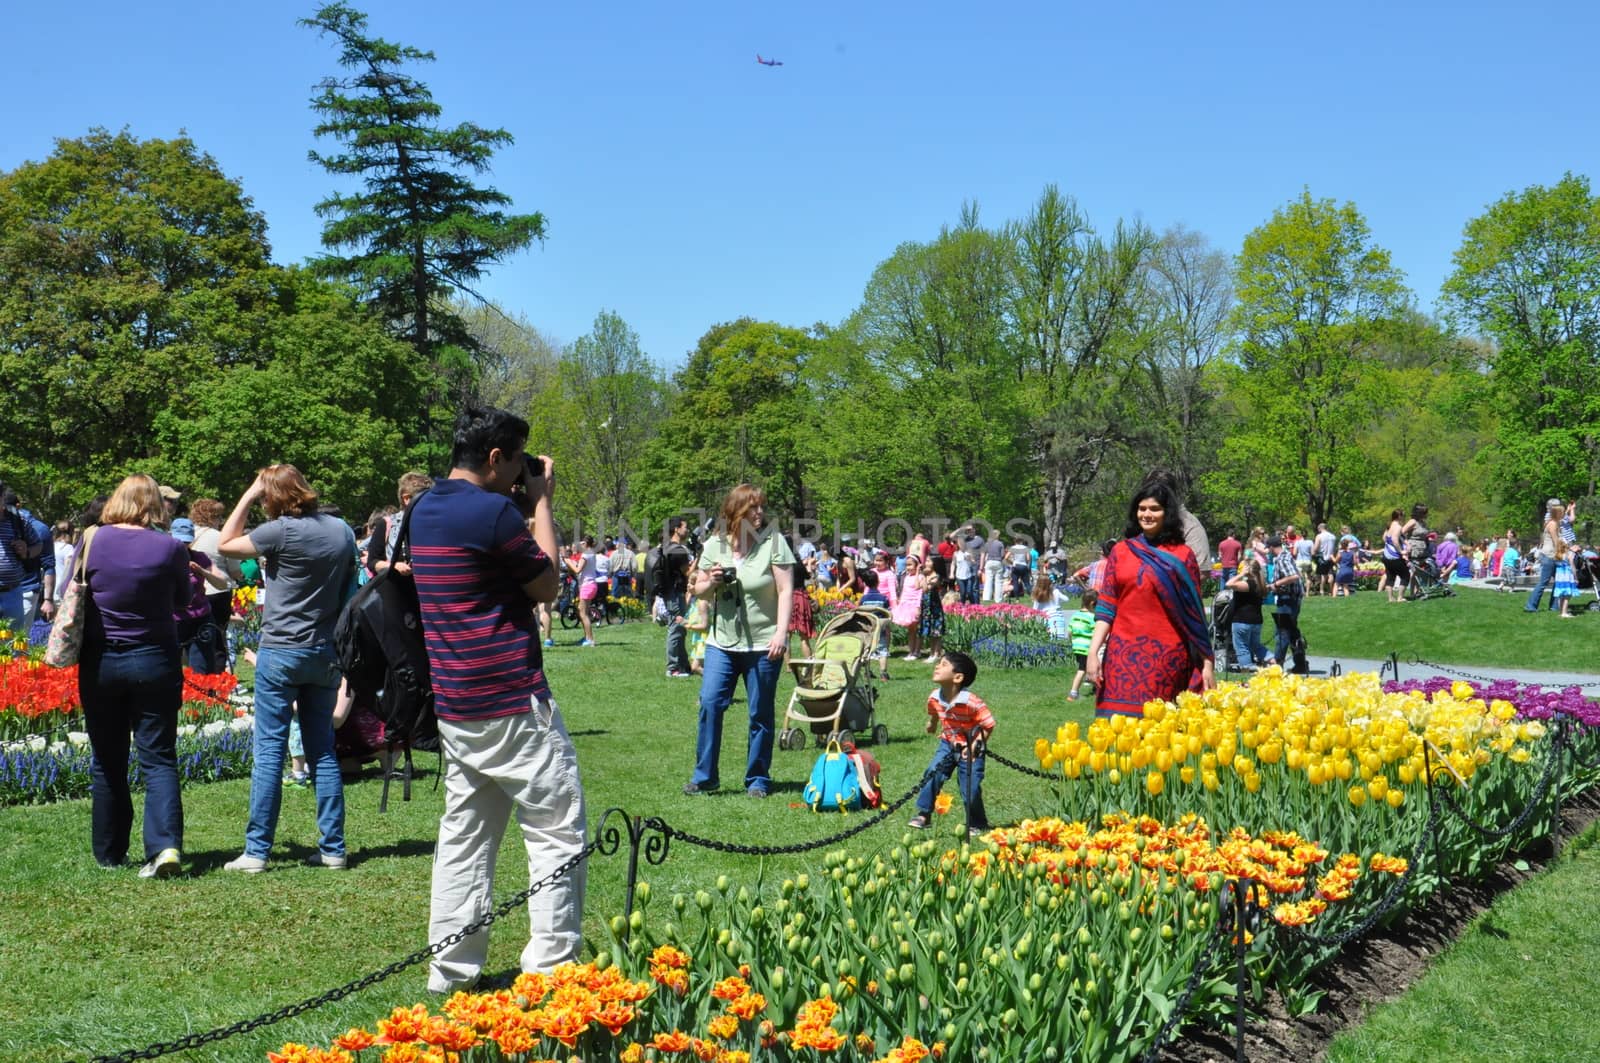 2014 Tulip Festival at Washington Park in Albany, New York State by sainaniritu